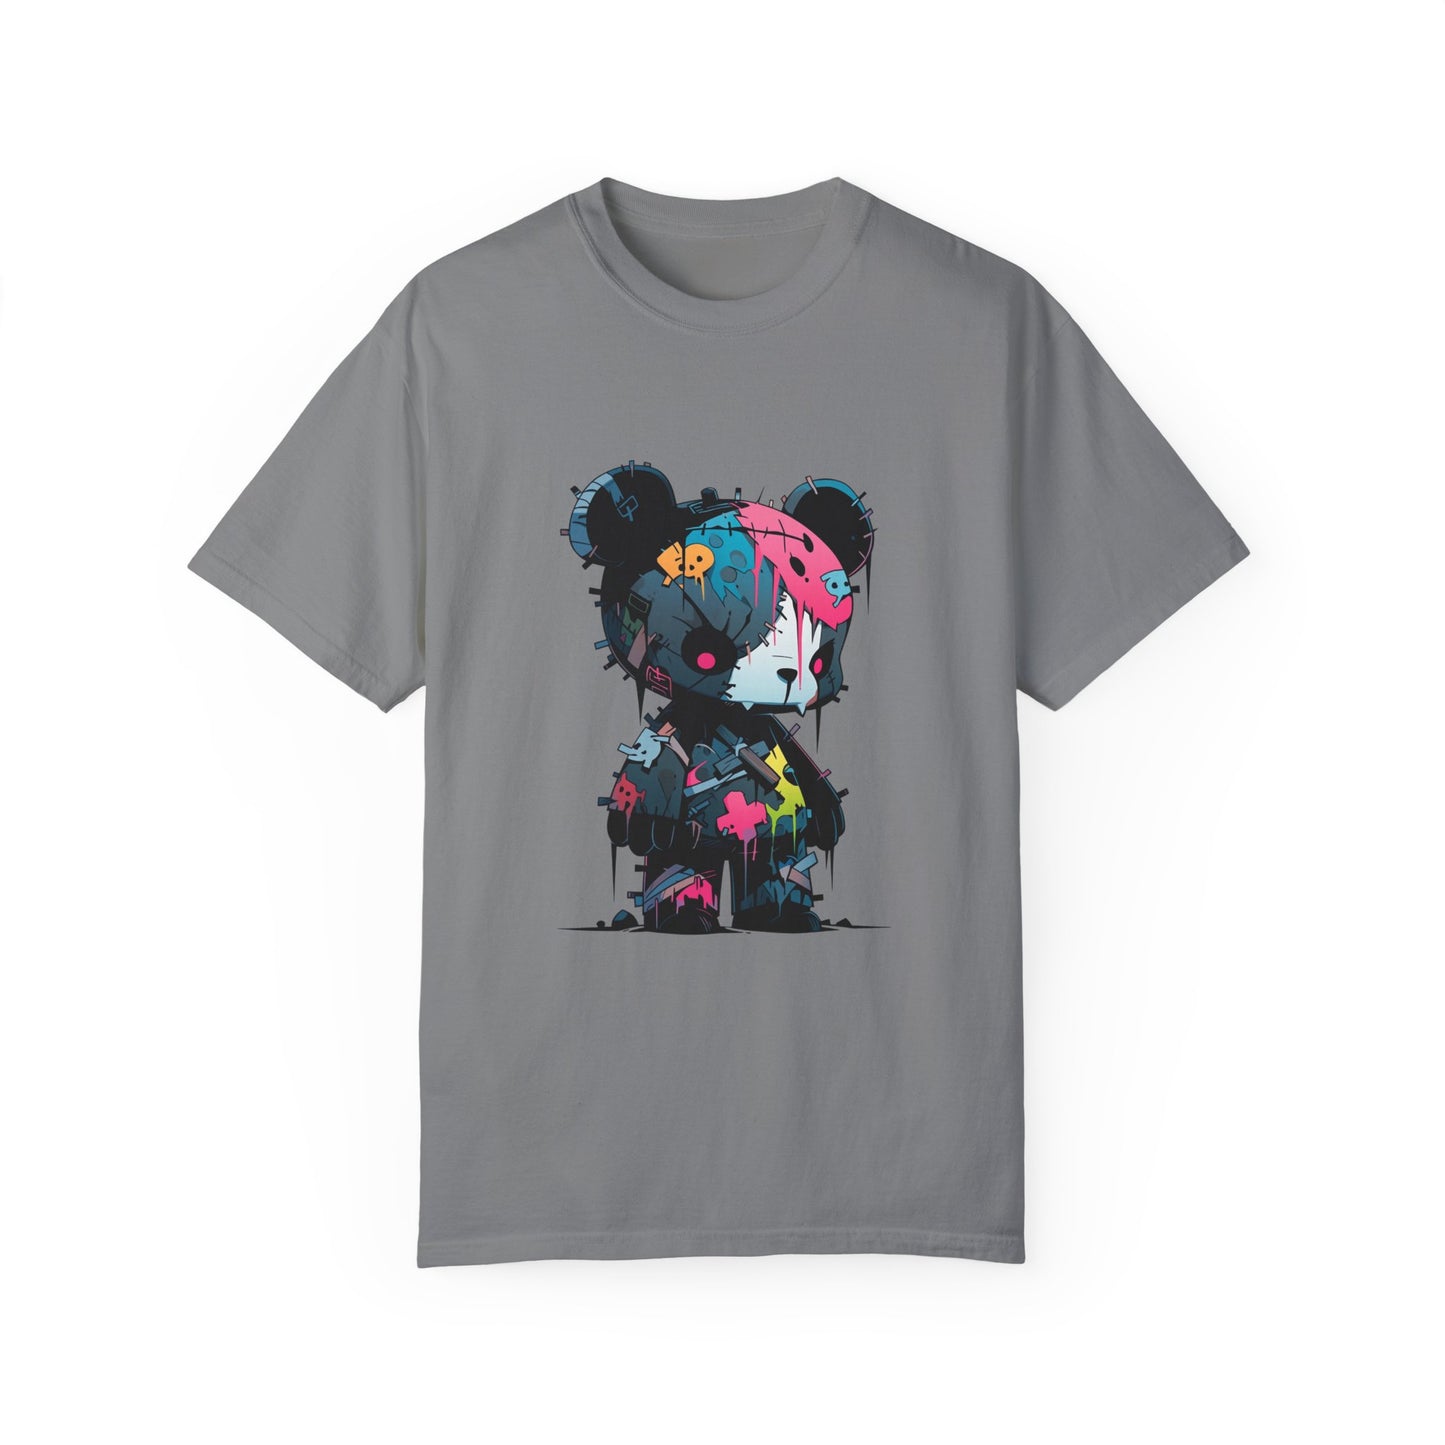 Hip Hop Teddy Bear Graphic Unisex Garment-dyed T-shirt Cotton Funny Humorous Graphic Soft Premium Unisex Men Women Grey T-shirt Birthday Gift-9